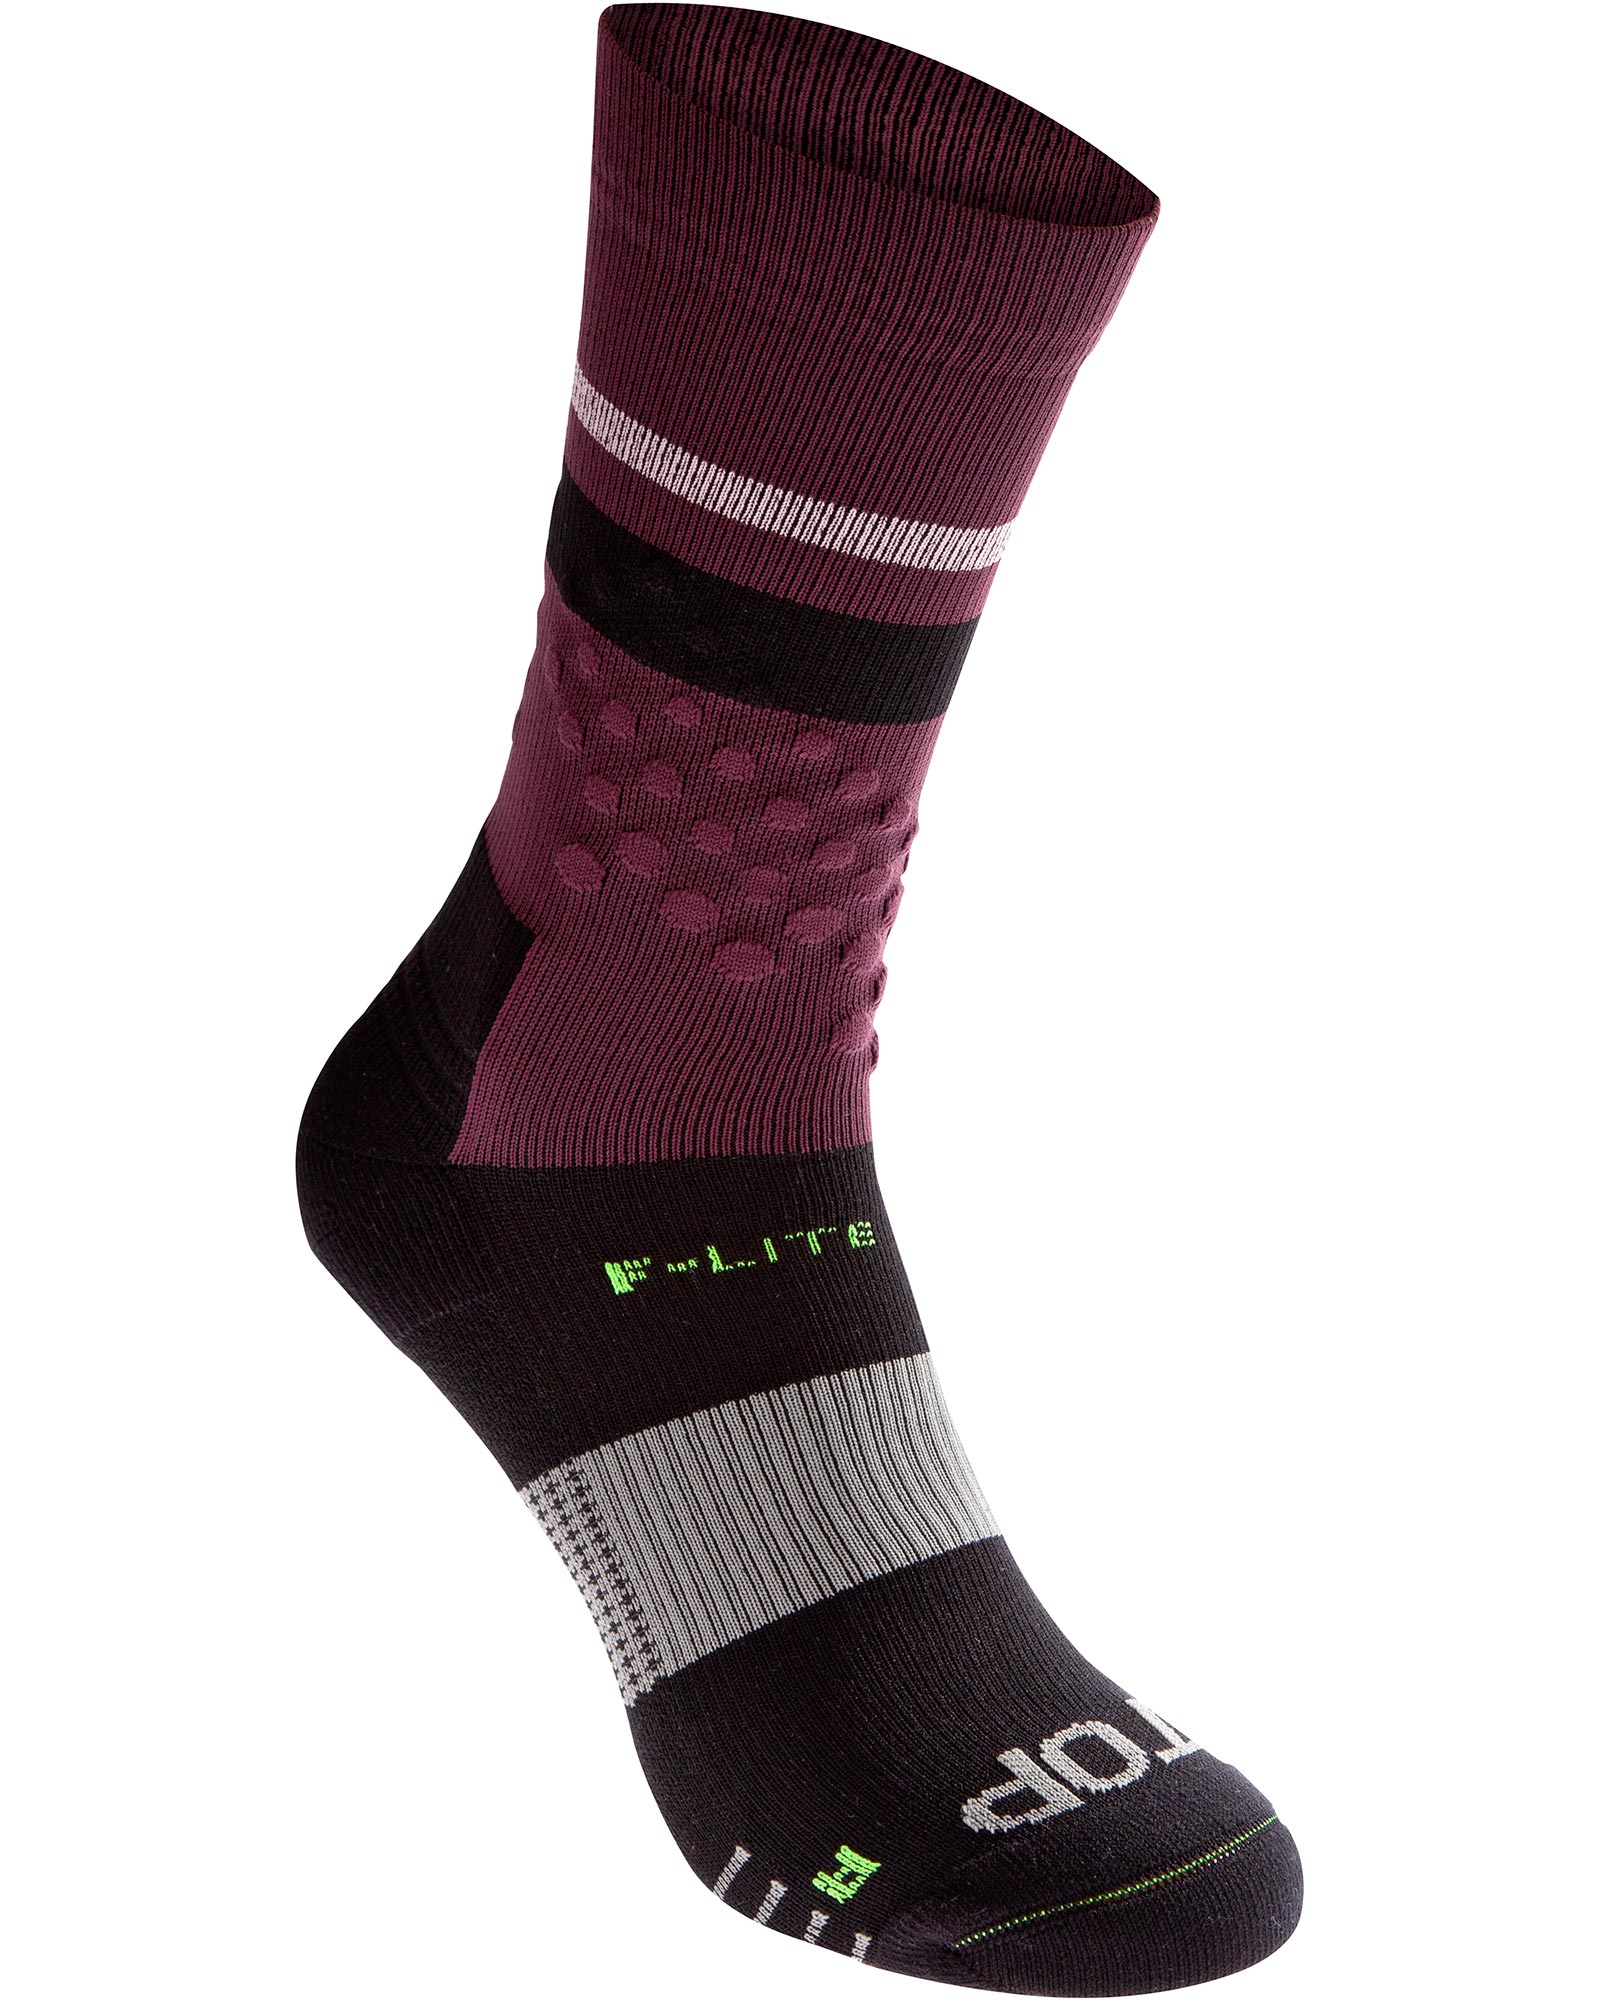 Inov 8 F Lite Crew Socks - Purple/Black S